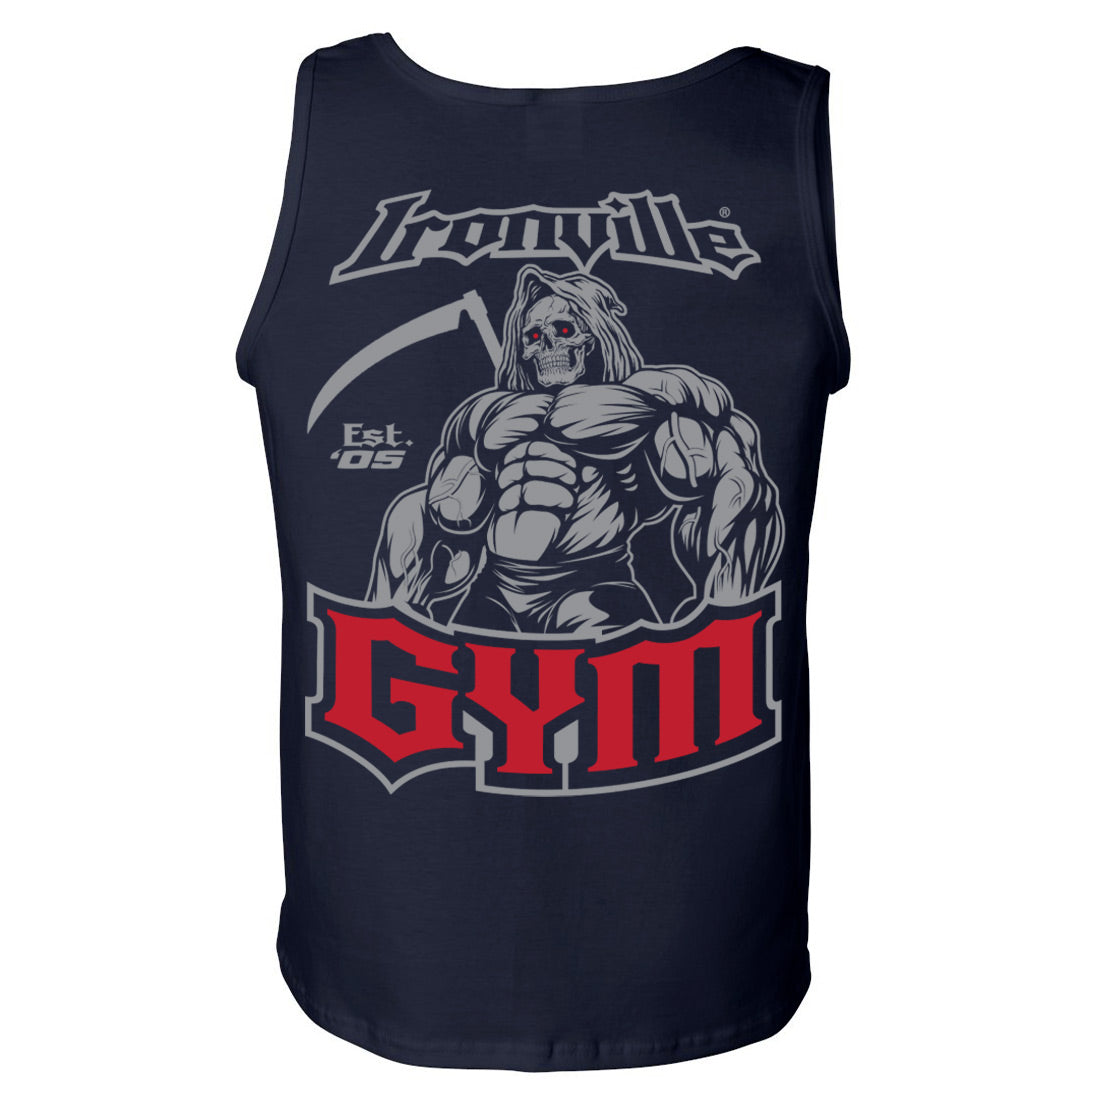 Ironville GYM REAPER Standard Cut Gym Tank Top